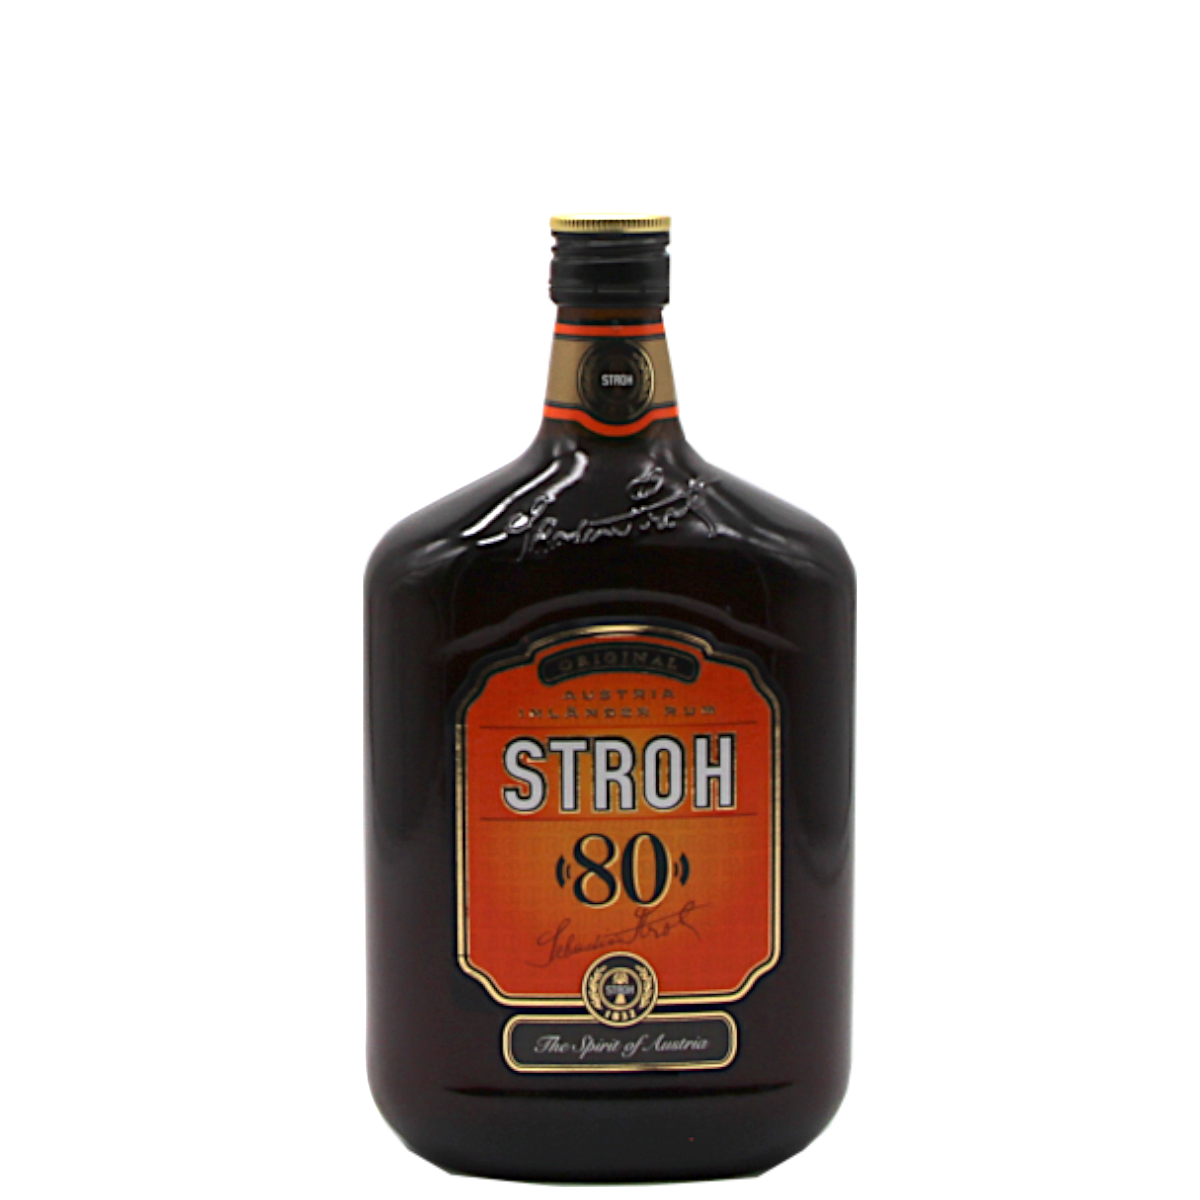 Stroh 80 Original Austria Inländer Rum | 80% | 0,7 L